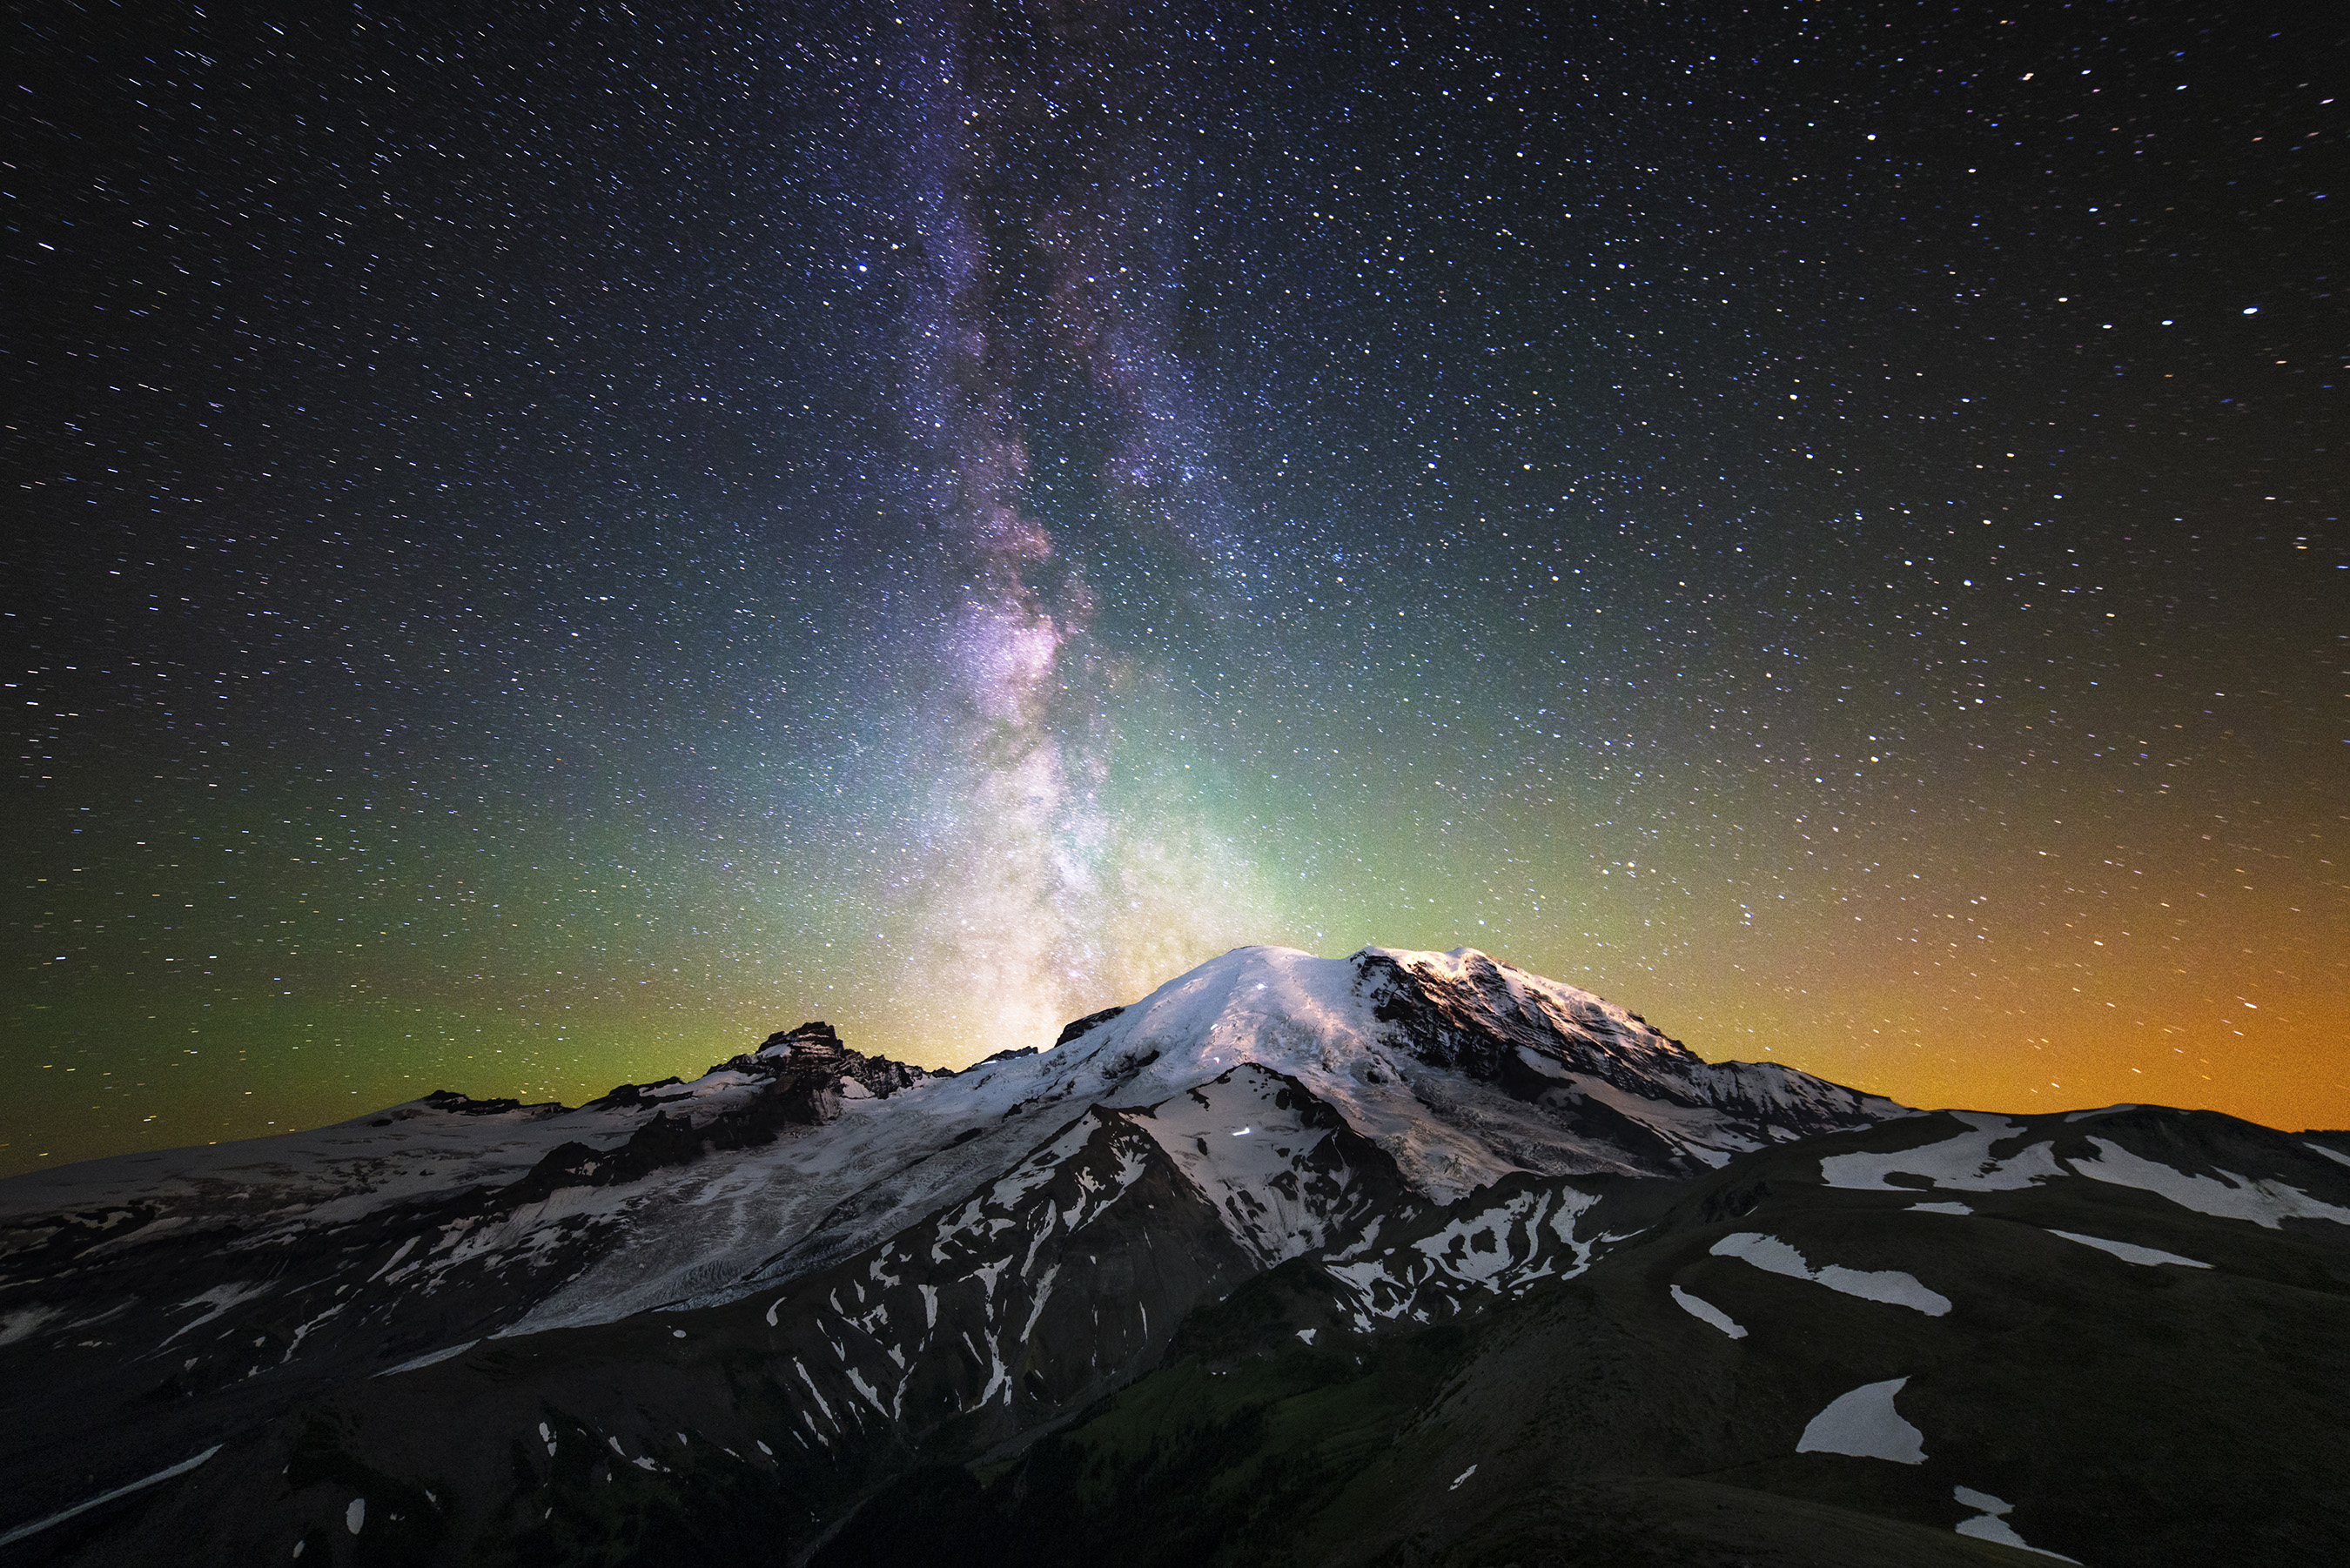 Mount Rainier National Park, Stephen Byrne, Share the Experience 2014 photo contest